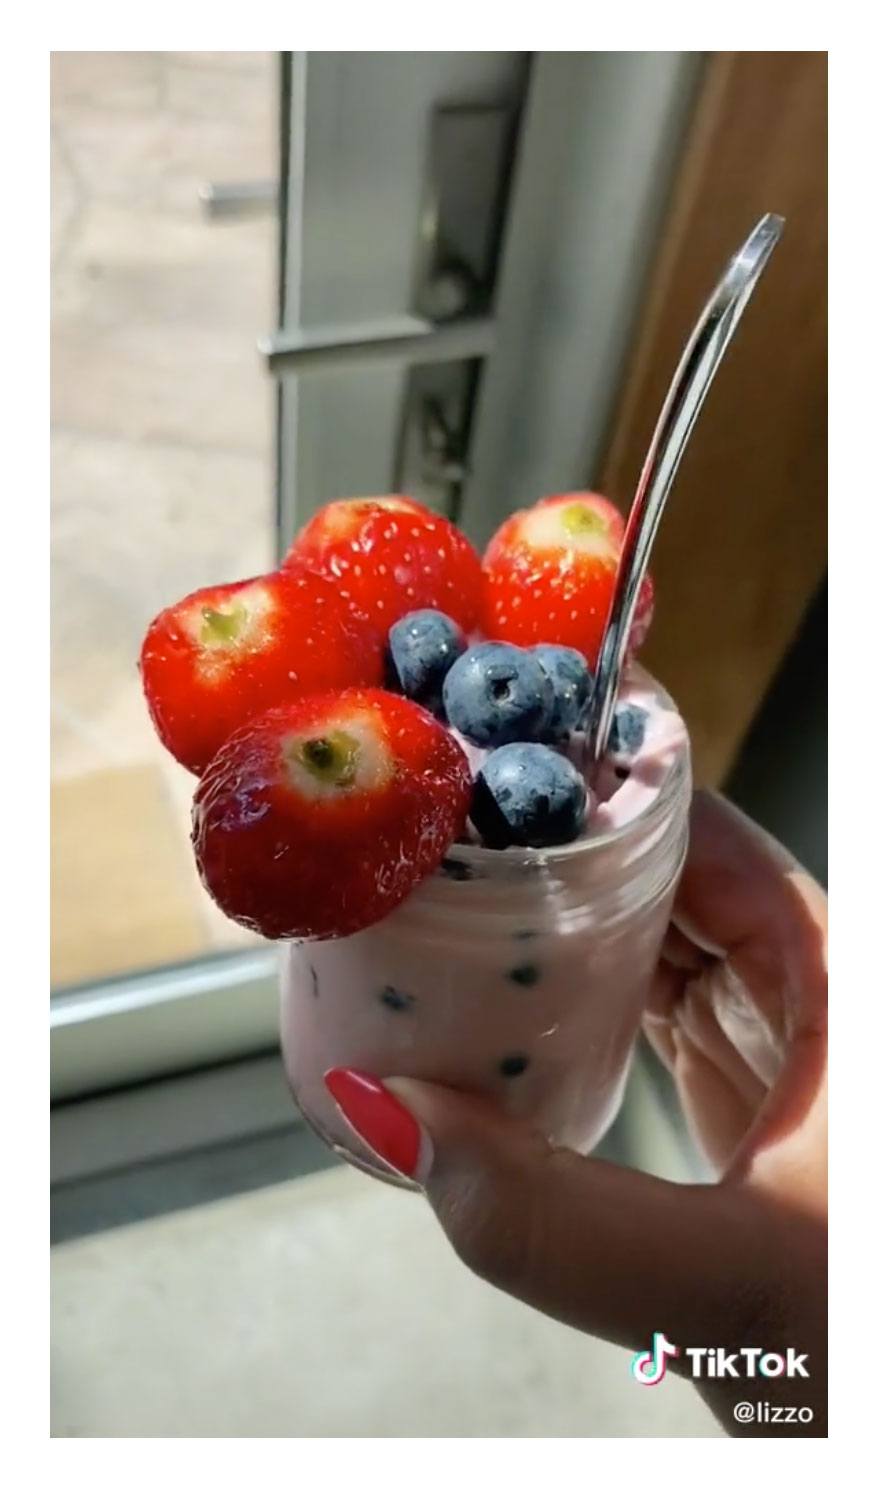 Yogurt Lizzo Reveals More of Her Favorite Vegan Eats TikTok